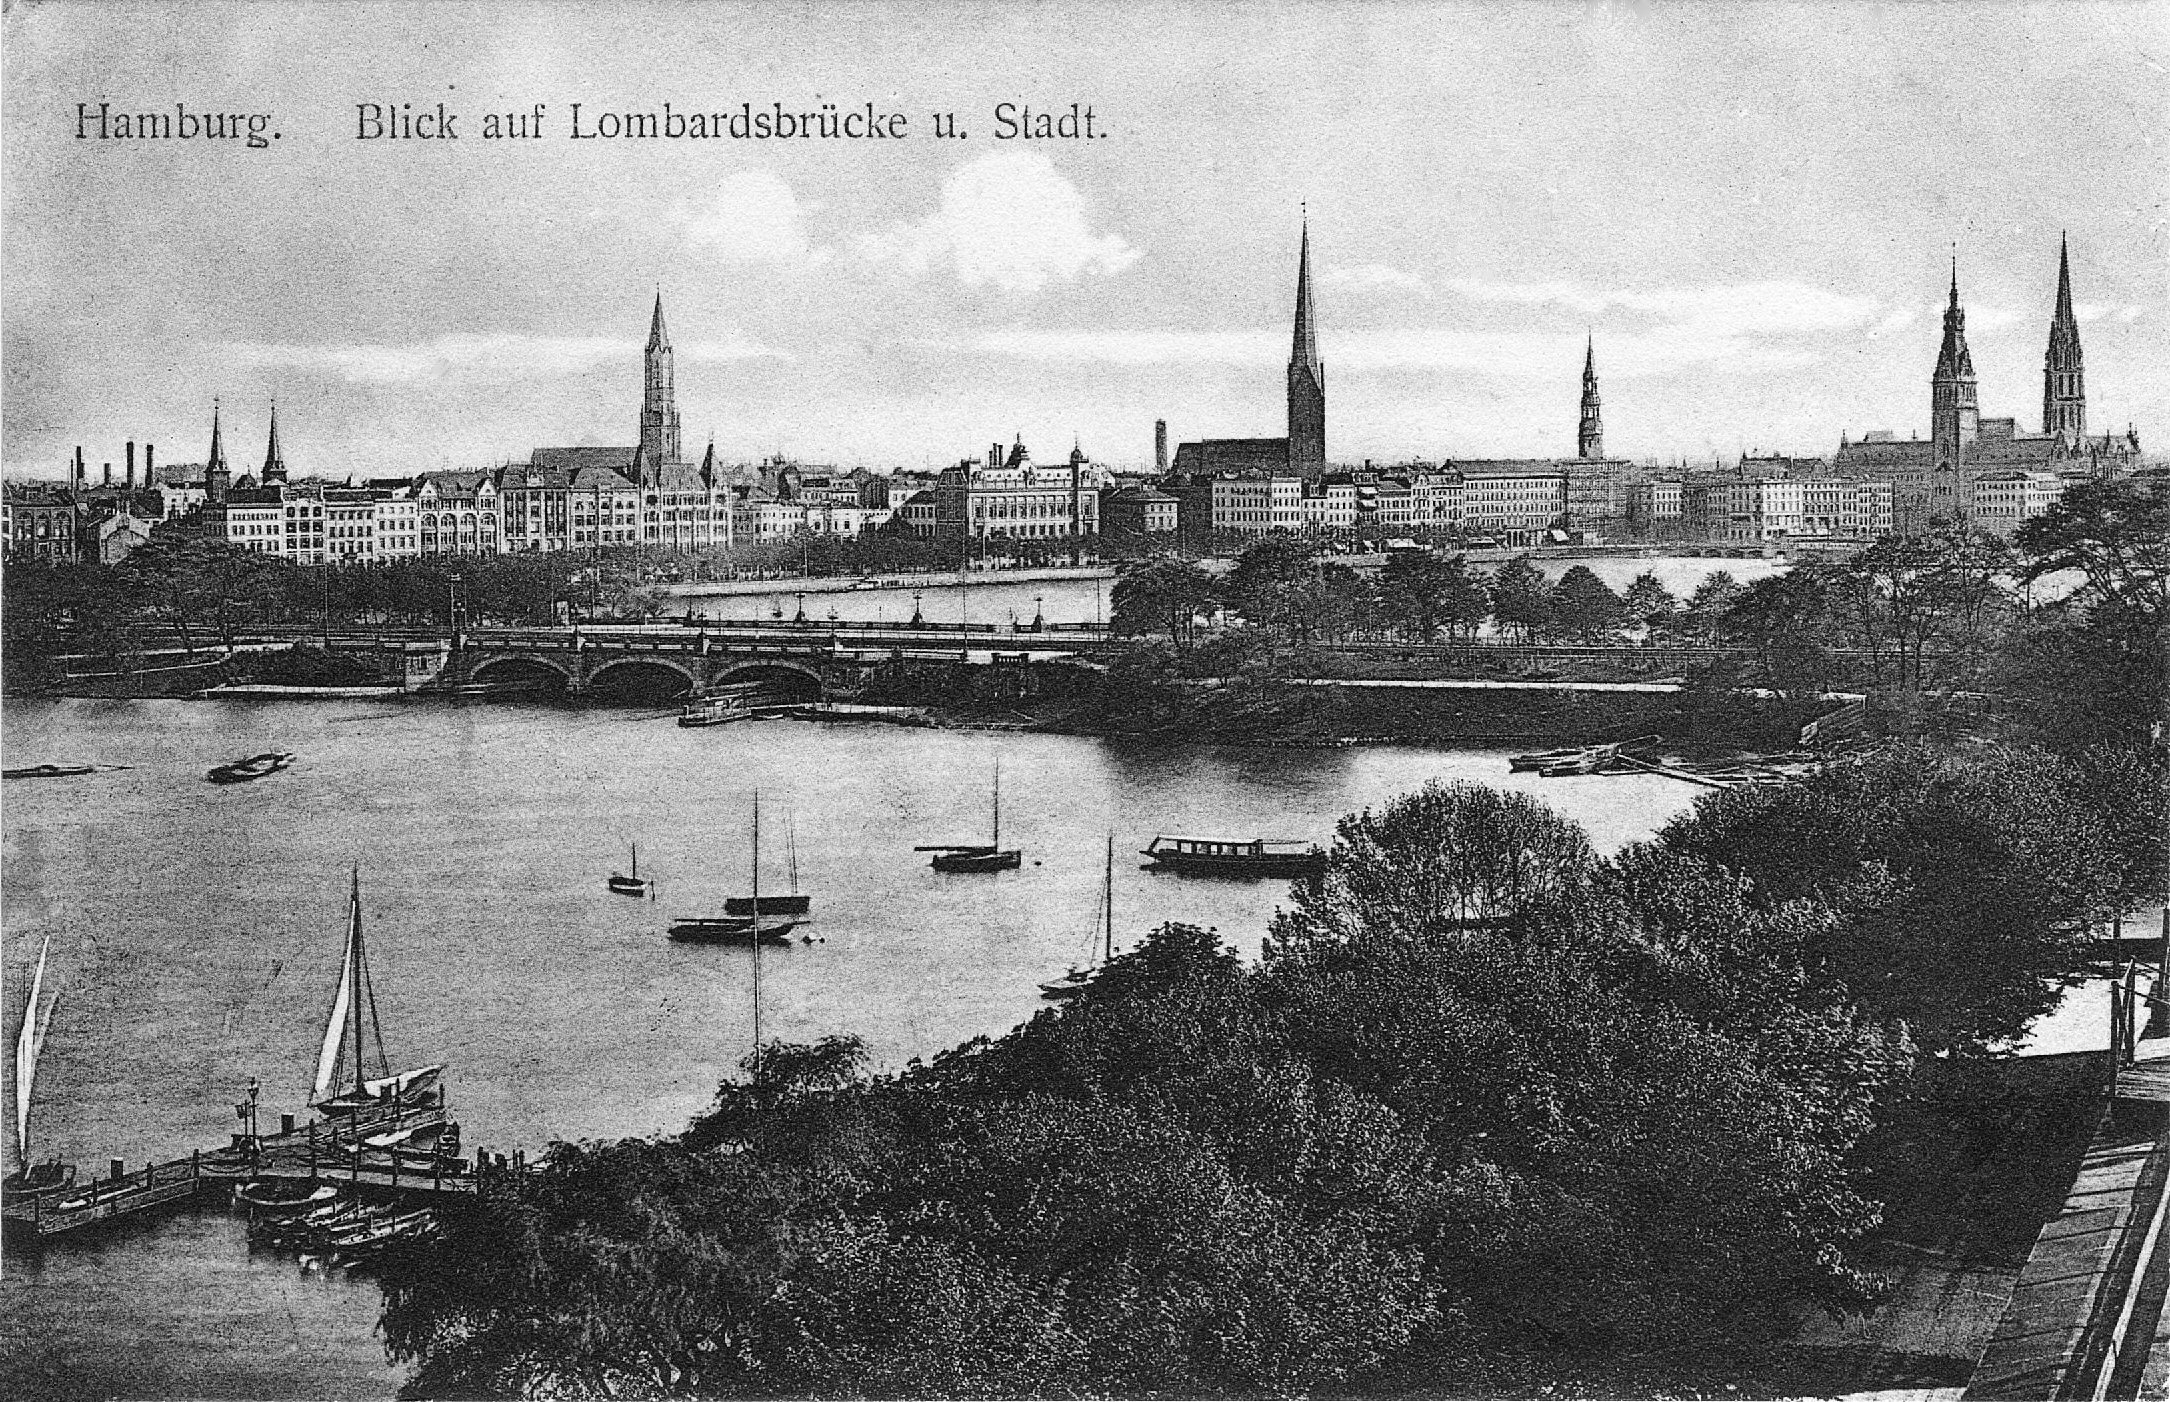 Abbildung 238: Hans Leipelt, Hamburg Lombardsbrücke, Postkarte gelaufen 1910, Privatbesitz